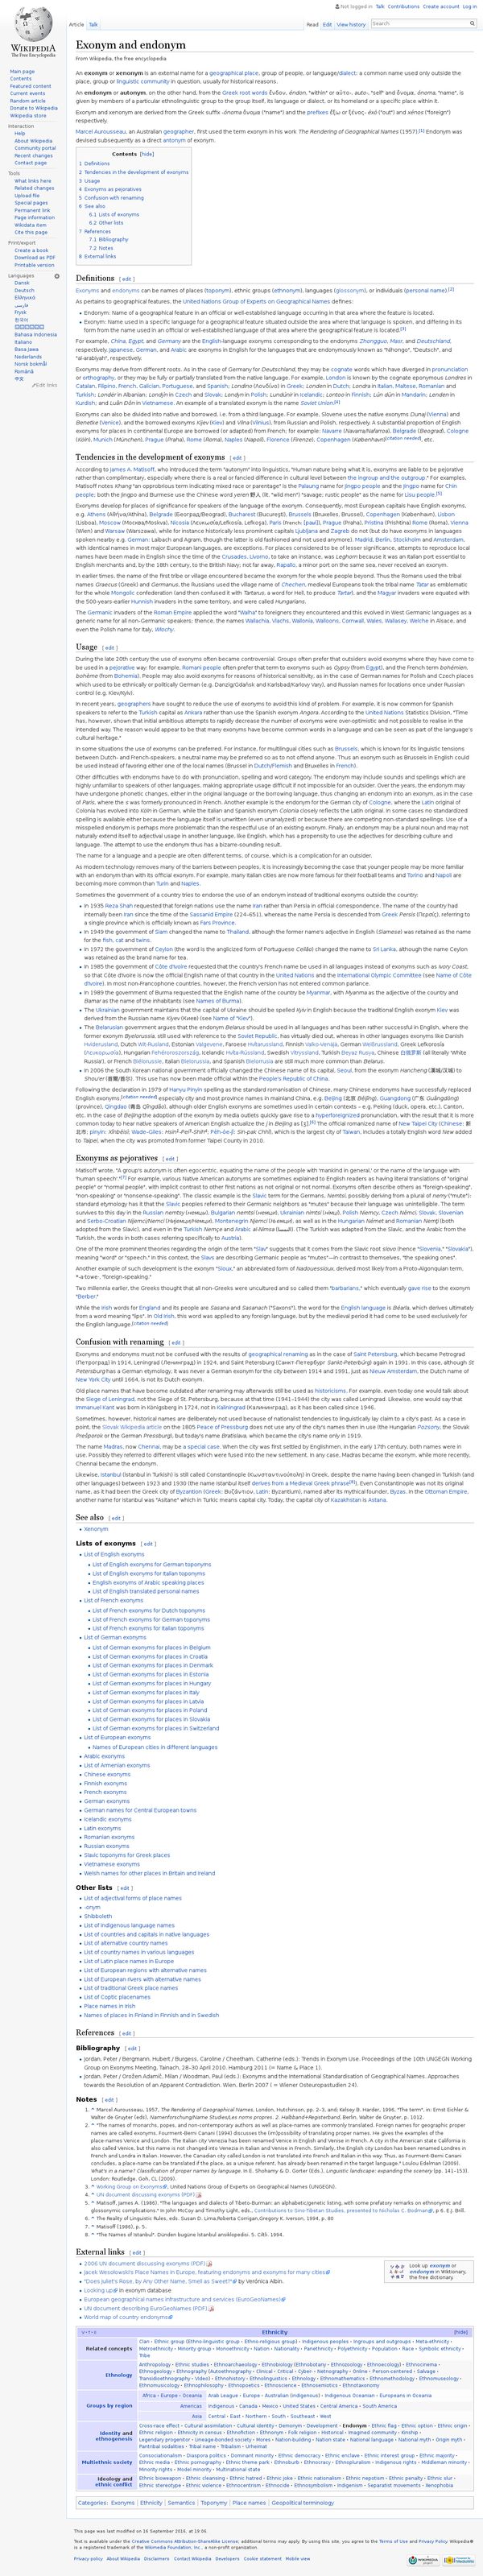 Exonym and endonym - Wikipedia, the free encyclopedia